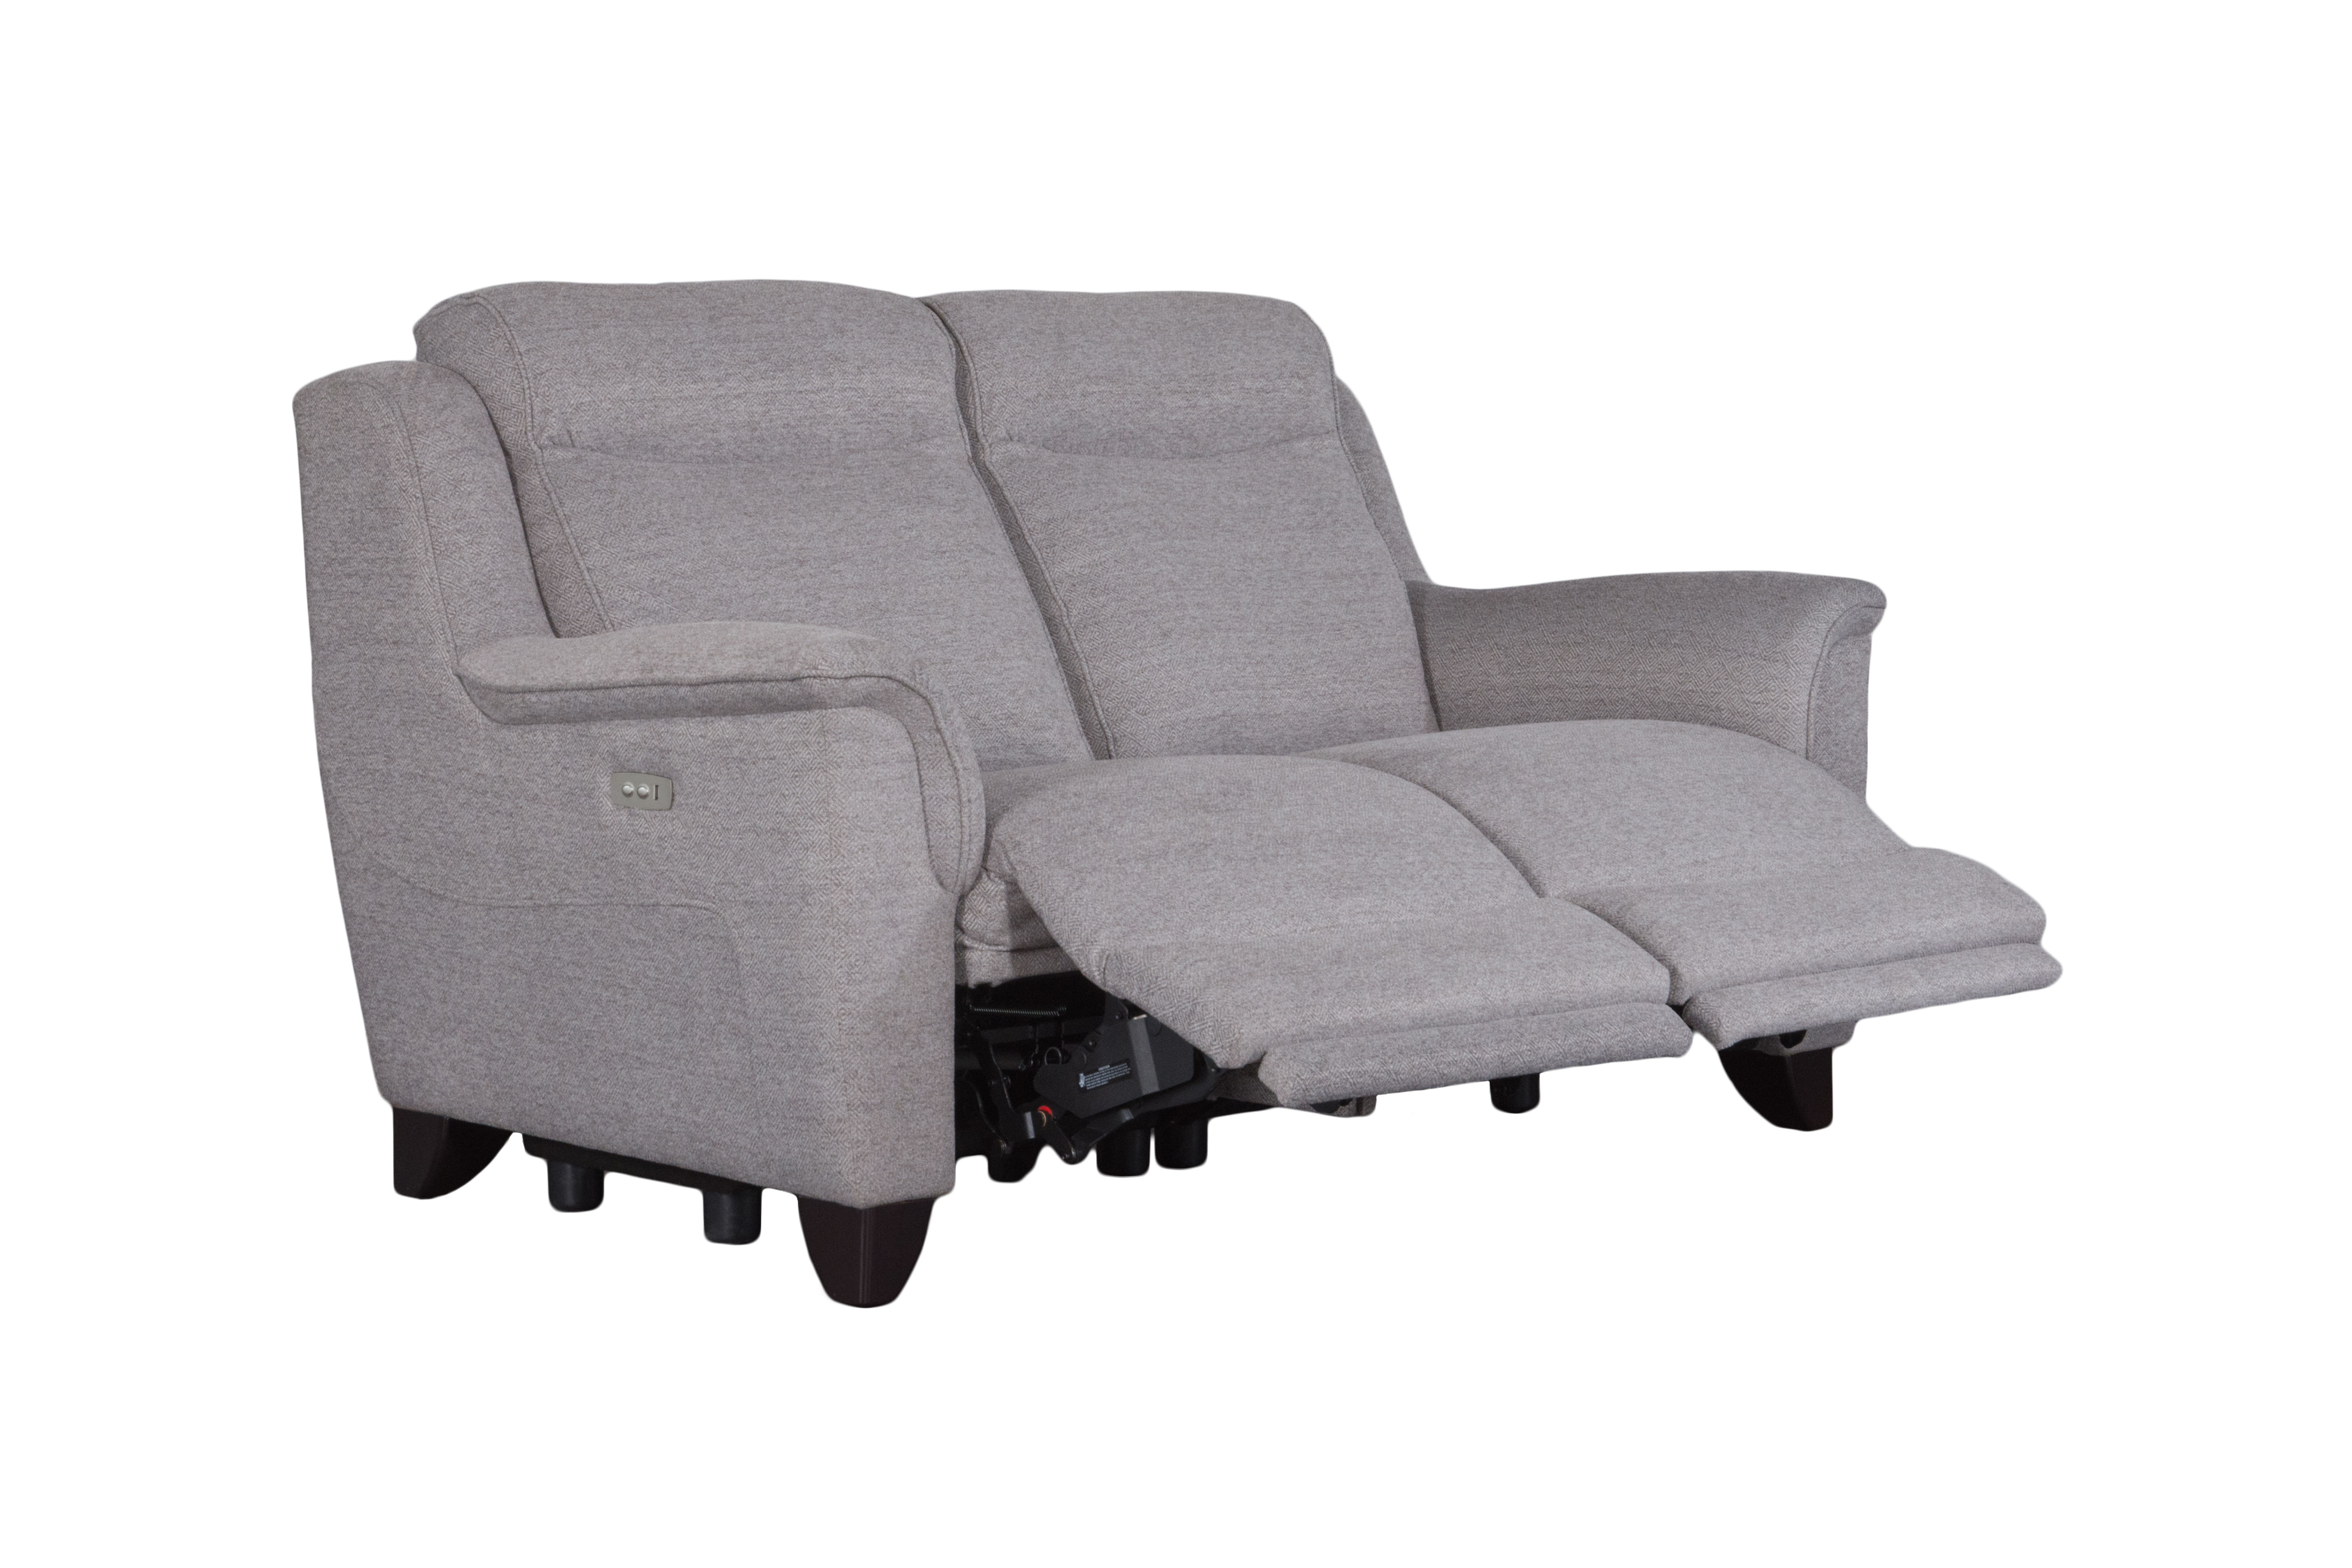 Parker Knoll Manhattan 2 Seater Double Recliner Sofa